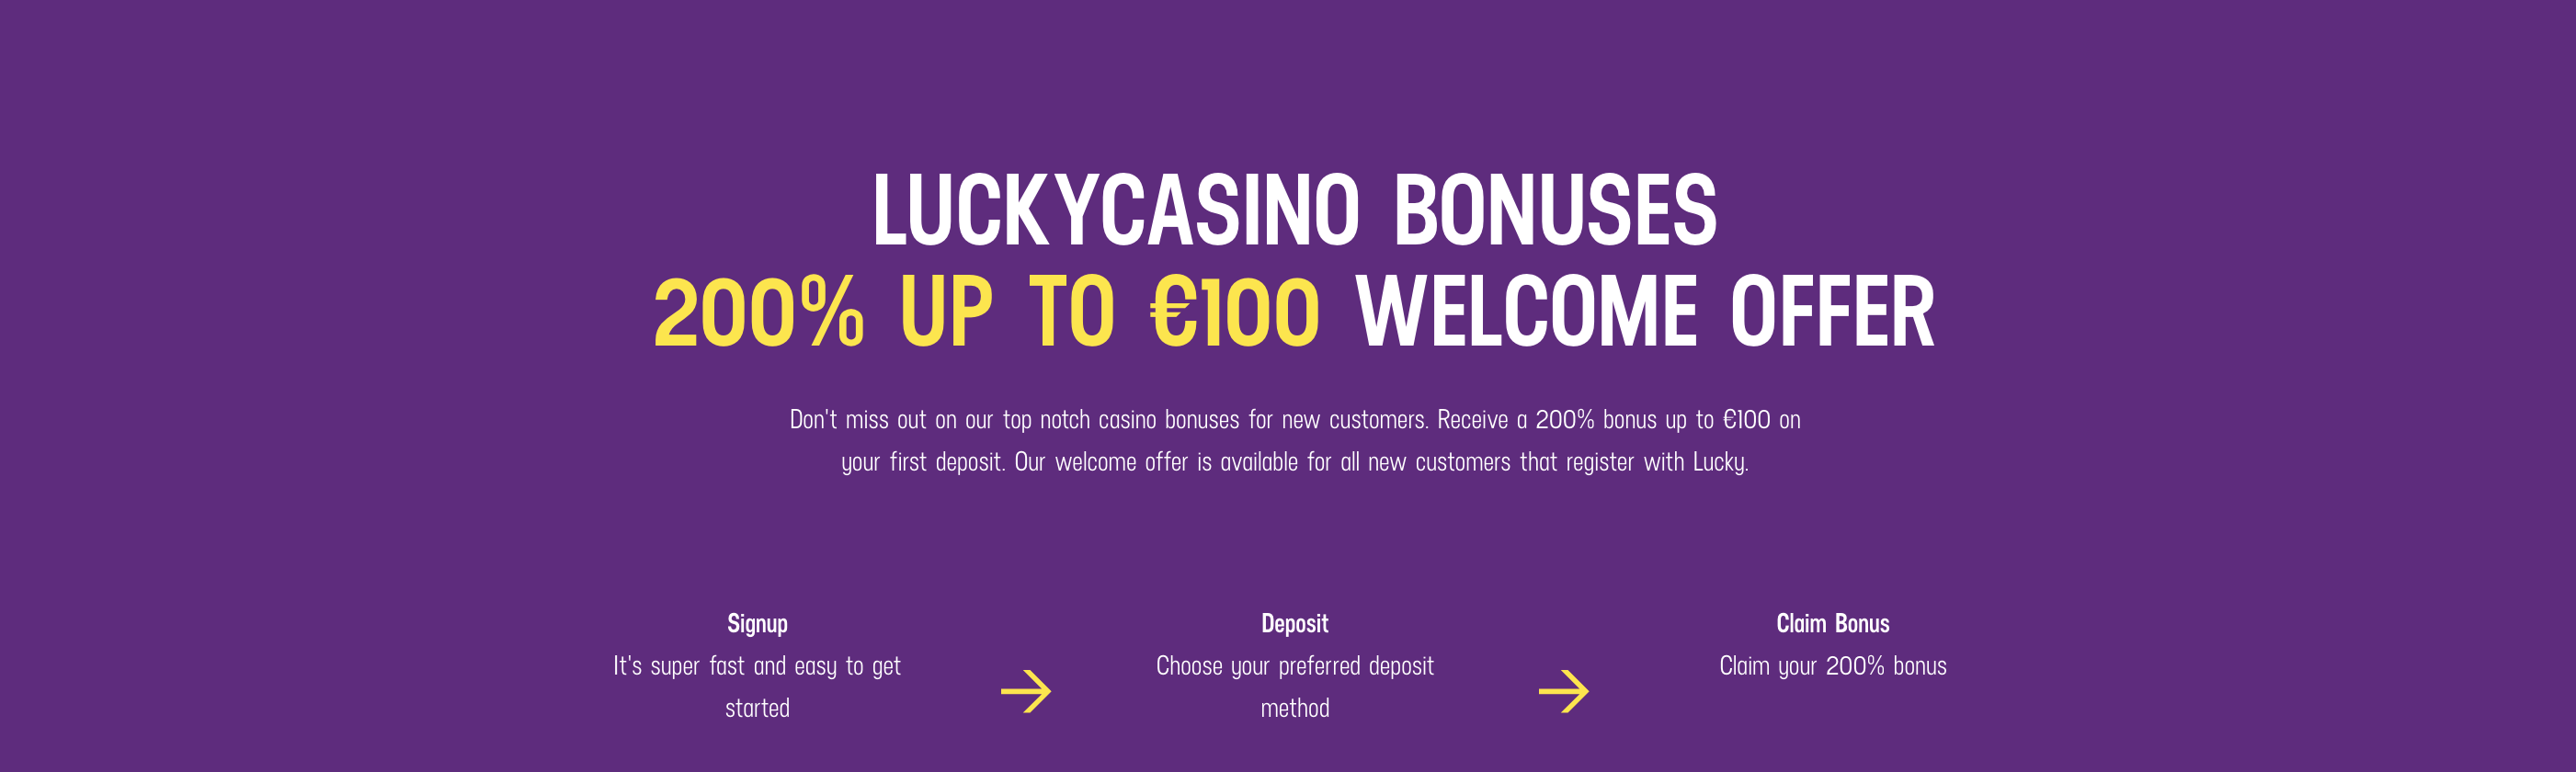 Wagering Requirements for 200% bonus casino